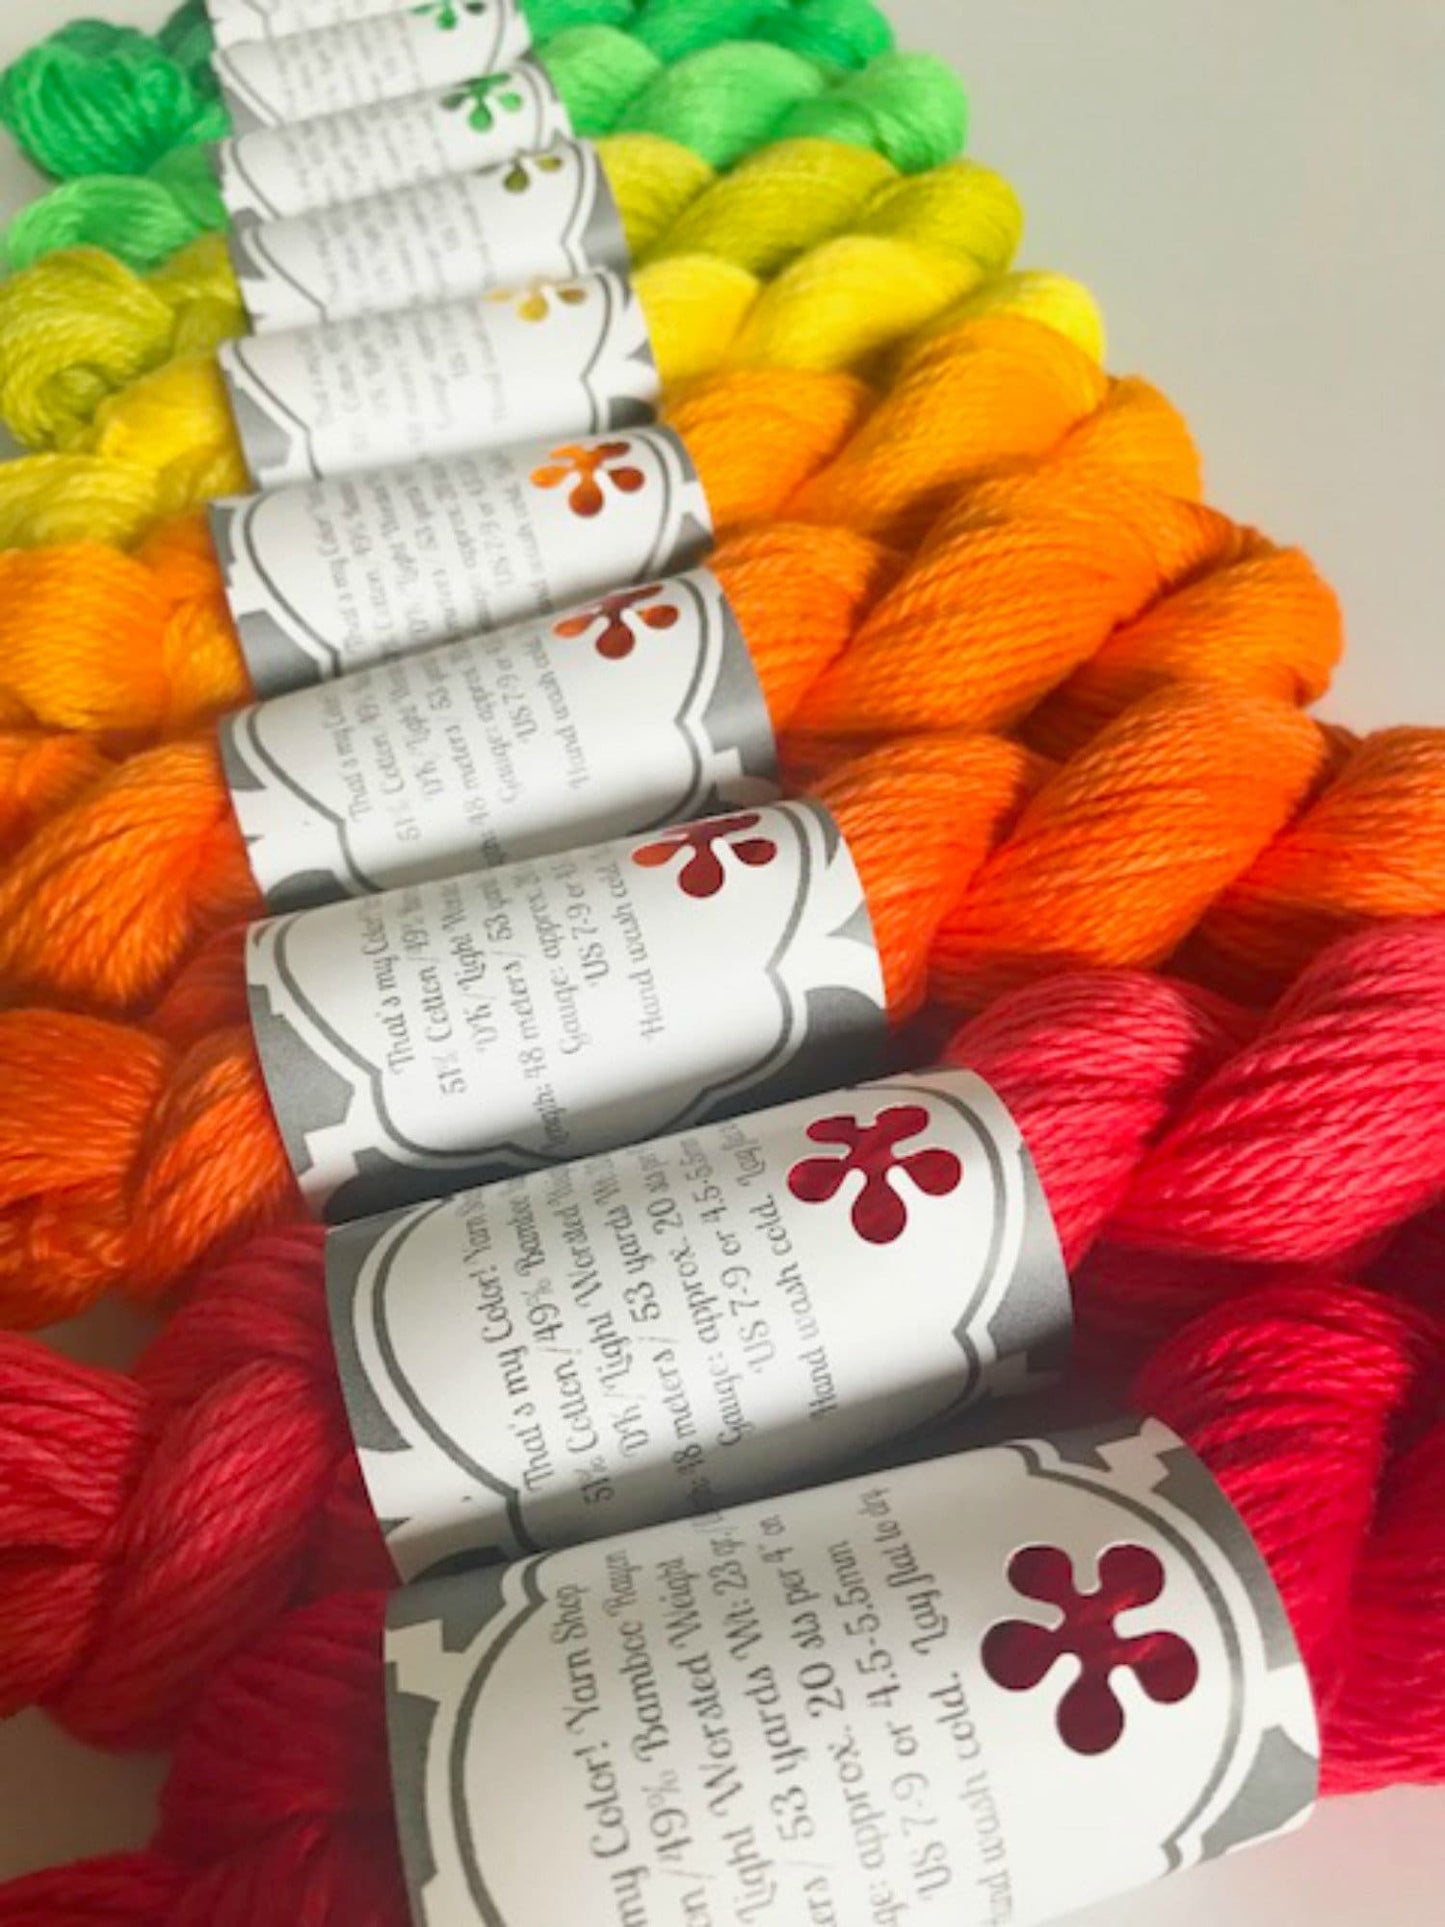 Rainbow Yarn Kit - 25 Mini Skeins - Fiber Gift Set - Hand Dyed Bamboo Cotton Yarn - 25 Skeins and Colors - Temperature Blanket Kit - Vegan